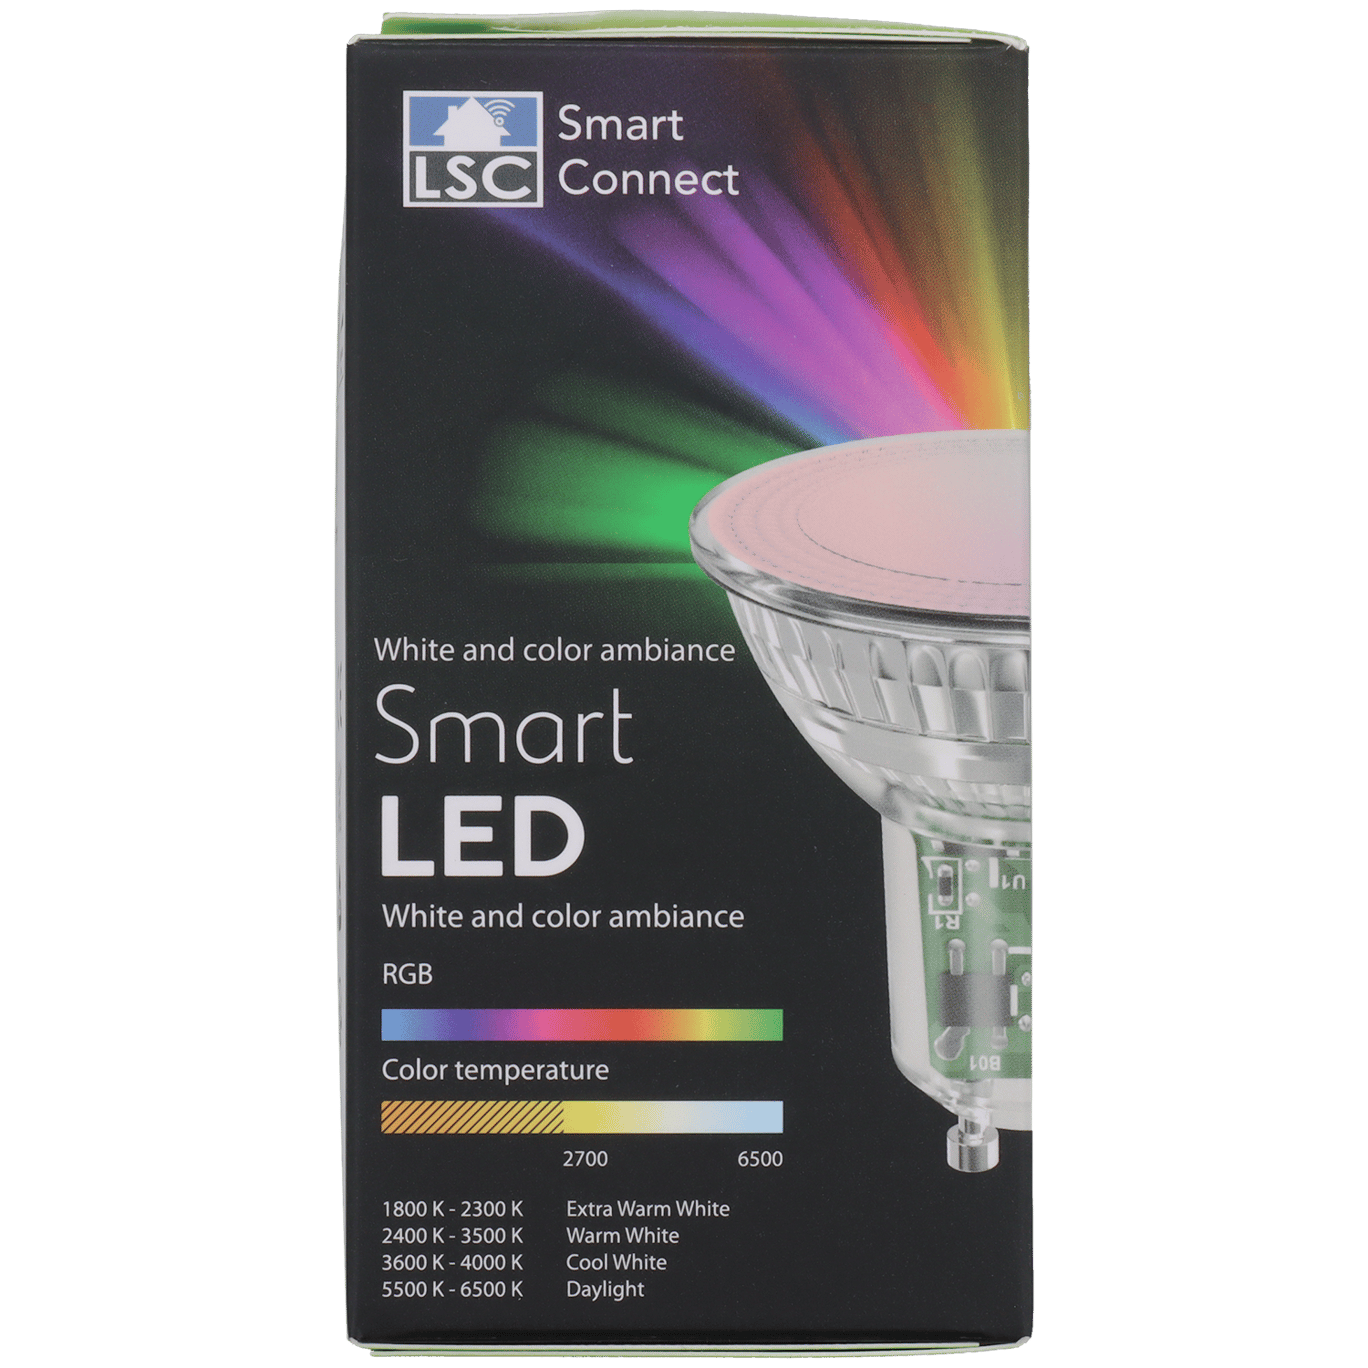 verdund Assimileren tabak LSC Smart Connect slimme ledlamp | Action.com